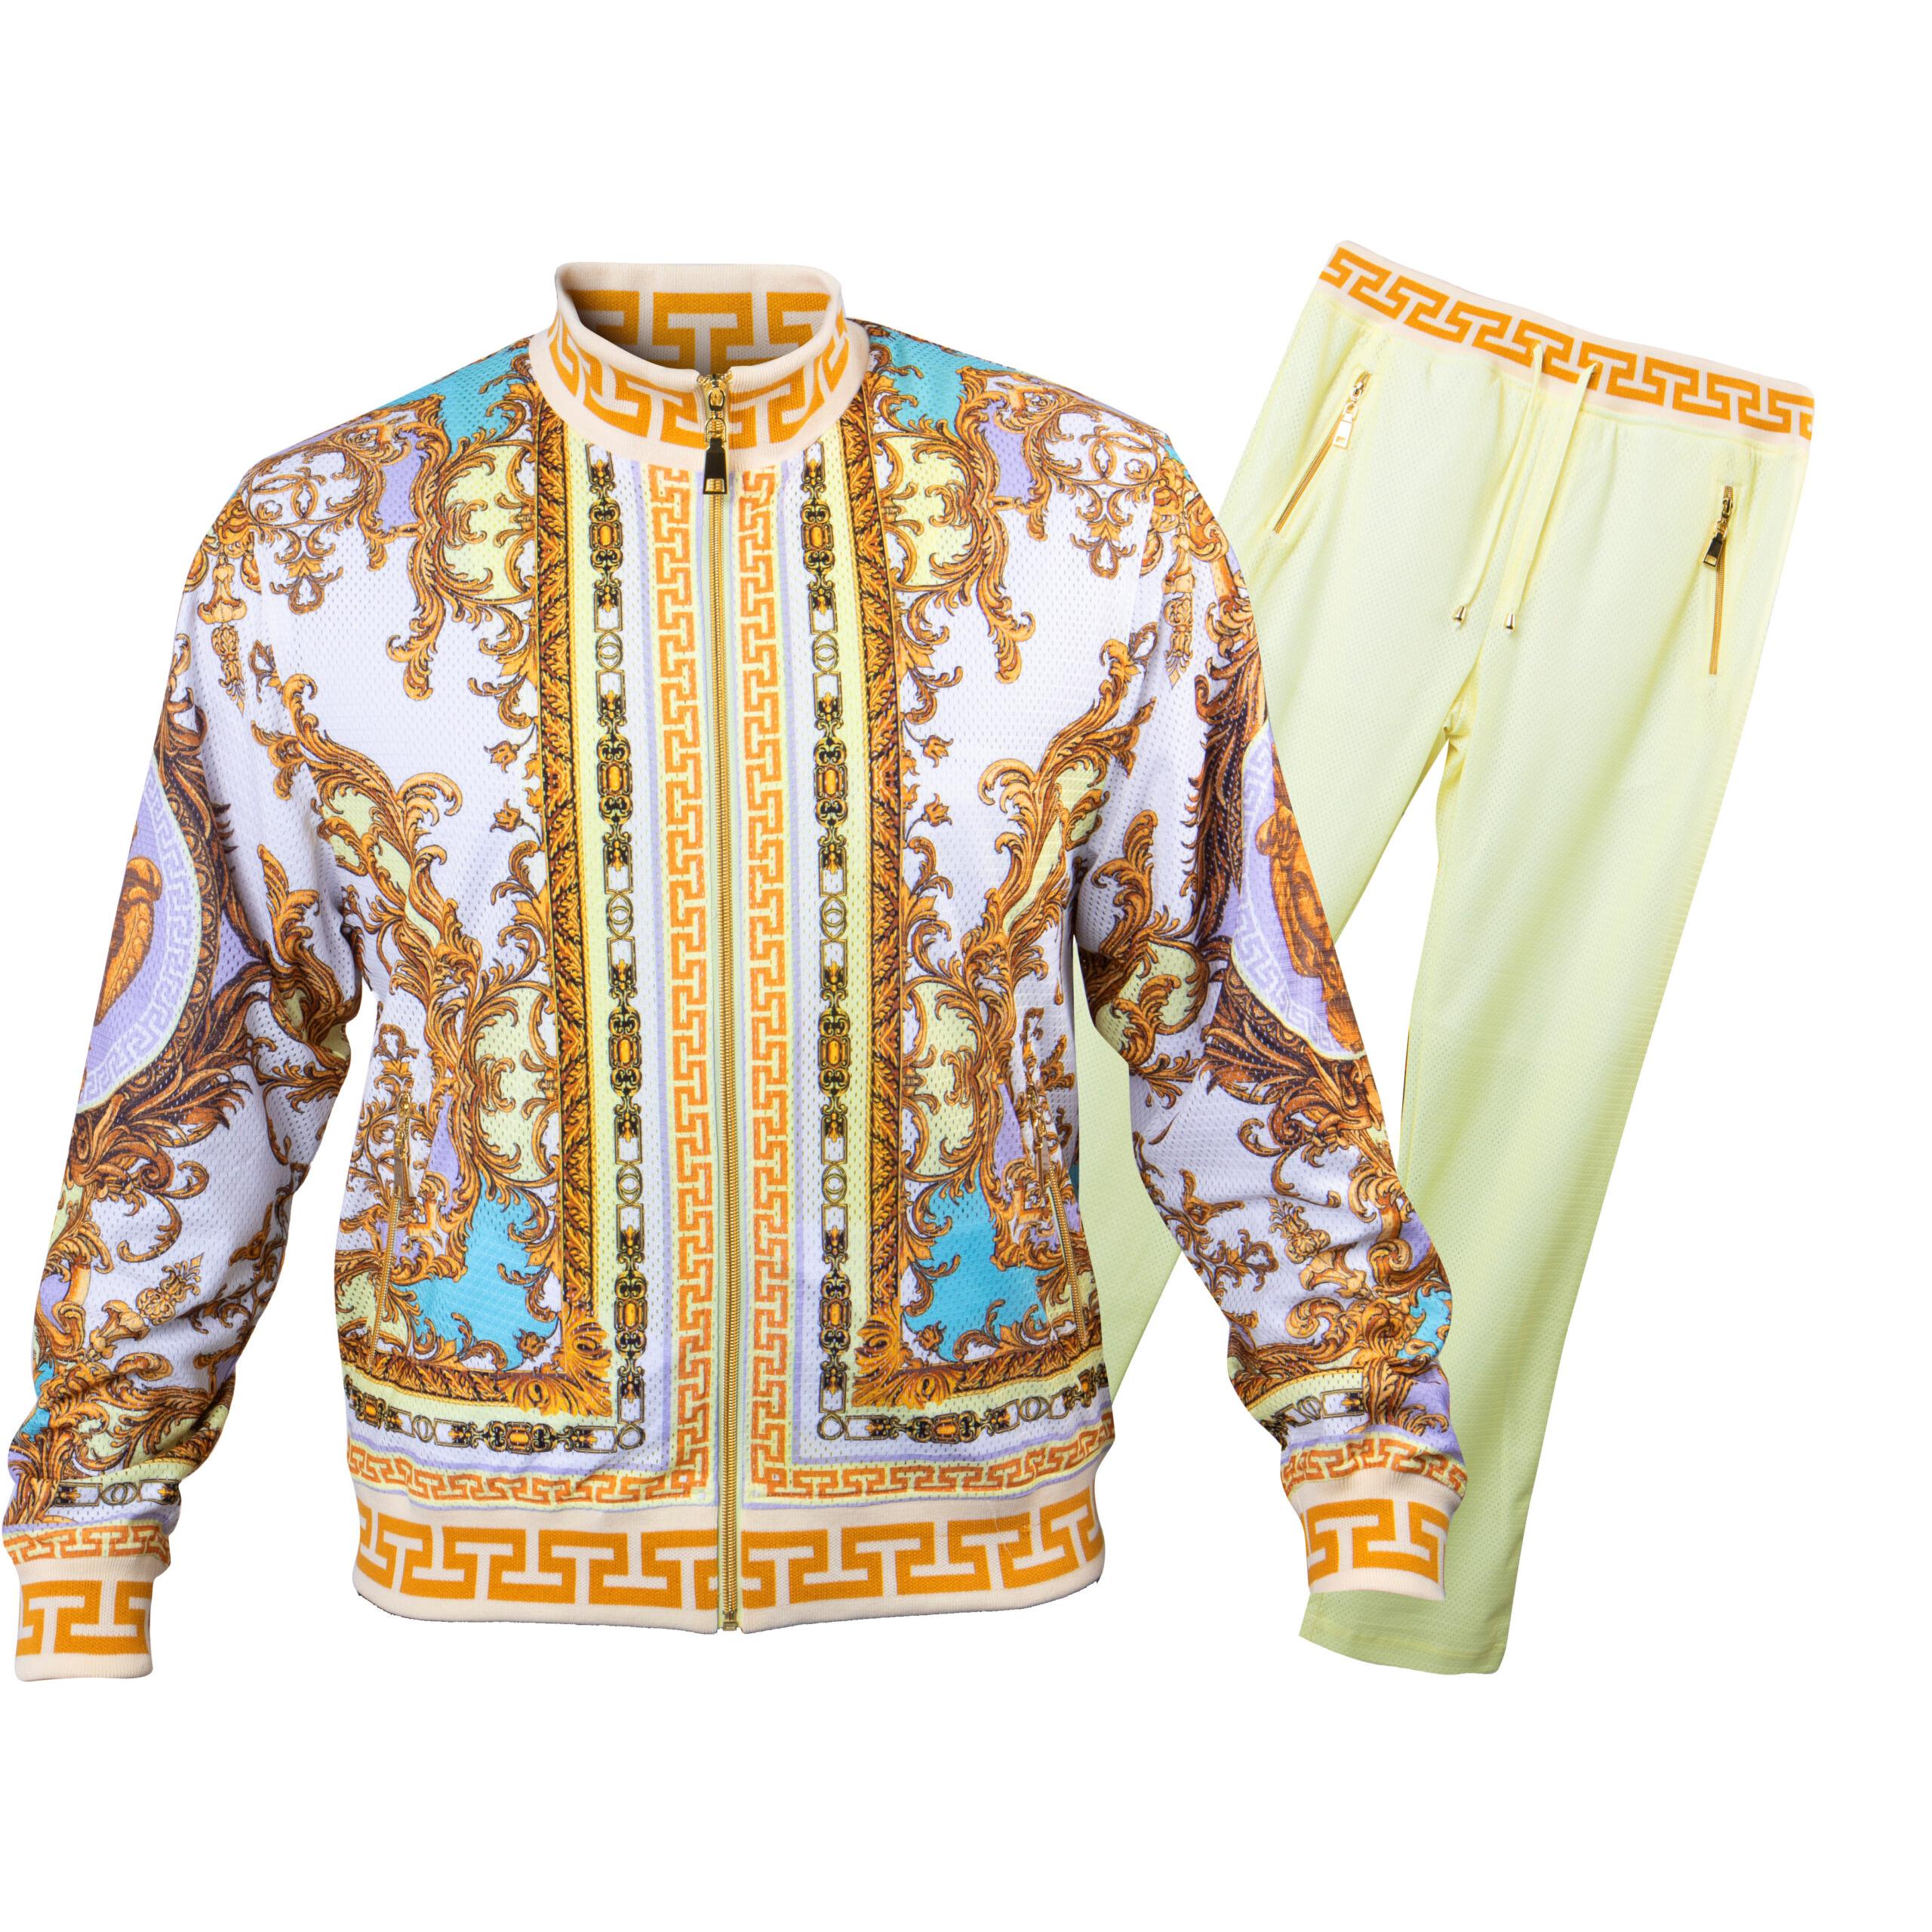 Prestige Yellow / White / Gold Medusa / Greek Design Tracksuit Outfit ...